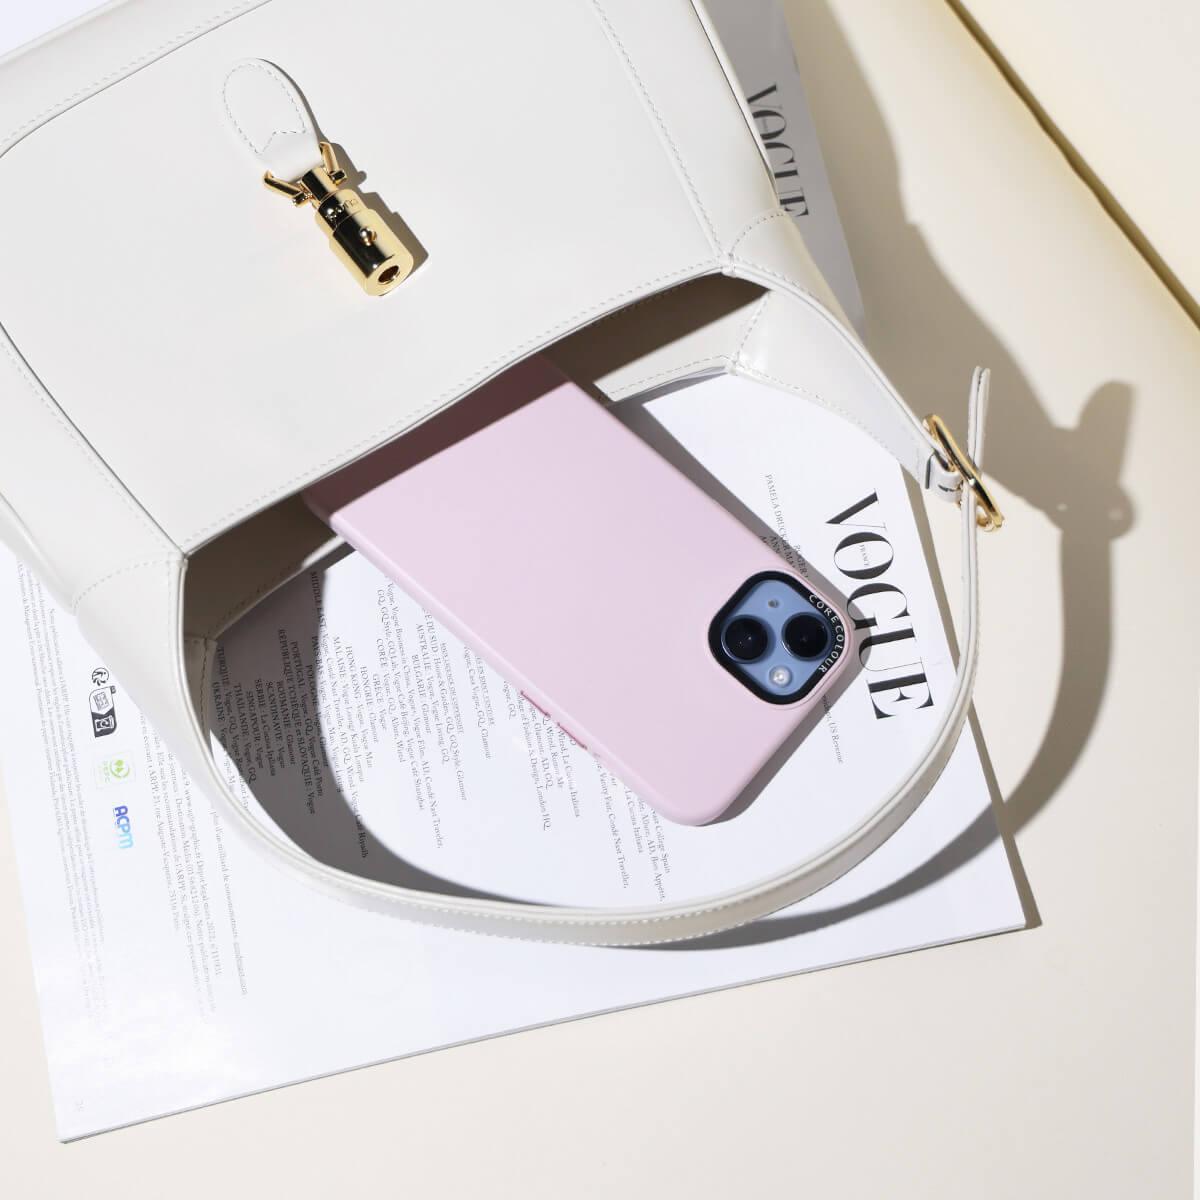 iPhone 12 Pink Ballerina Silicone Phone Case - CORECOLOUR AU